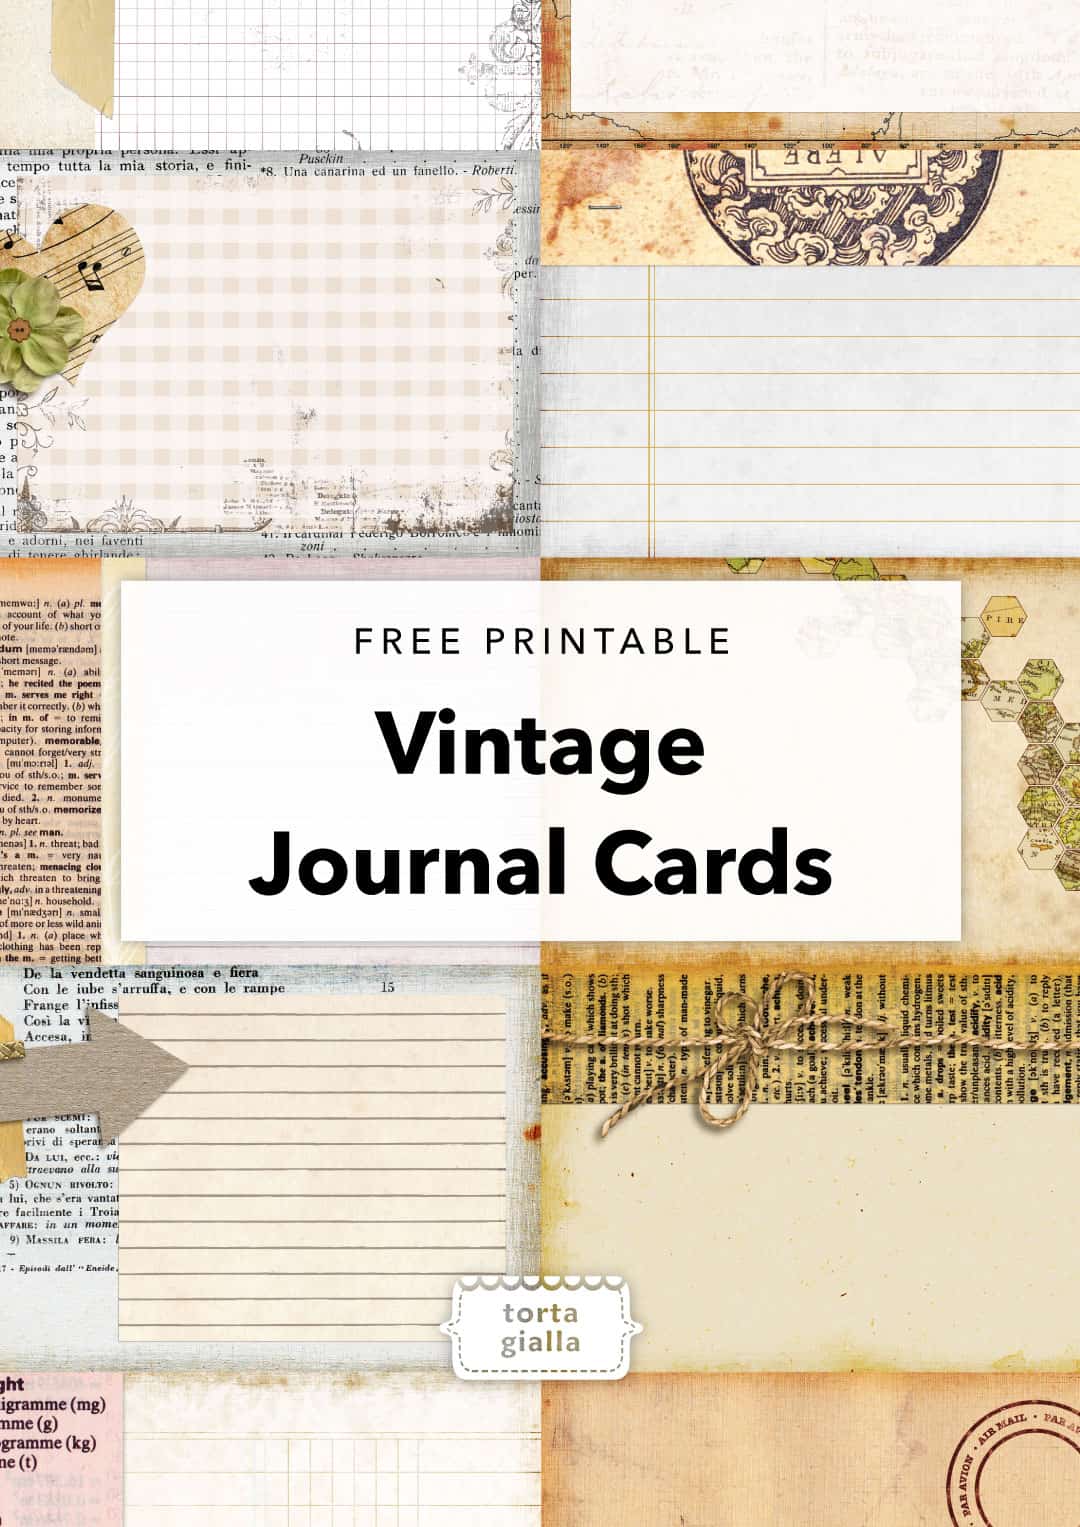 Free Printable Vintage Journal Cards tortagialla